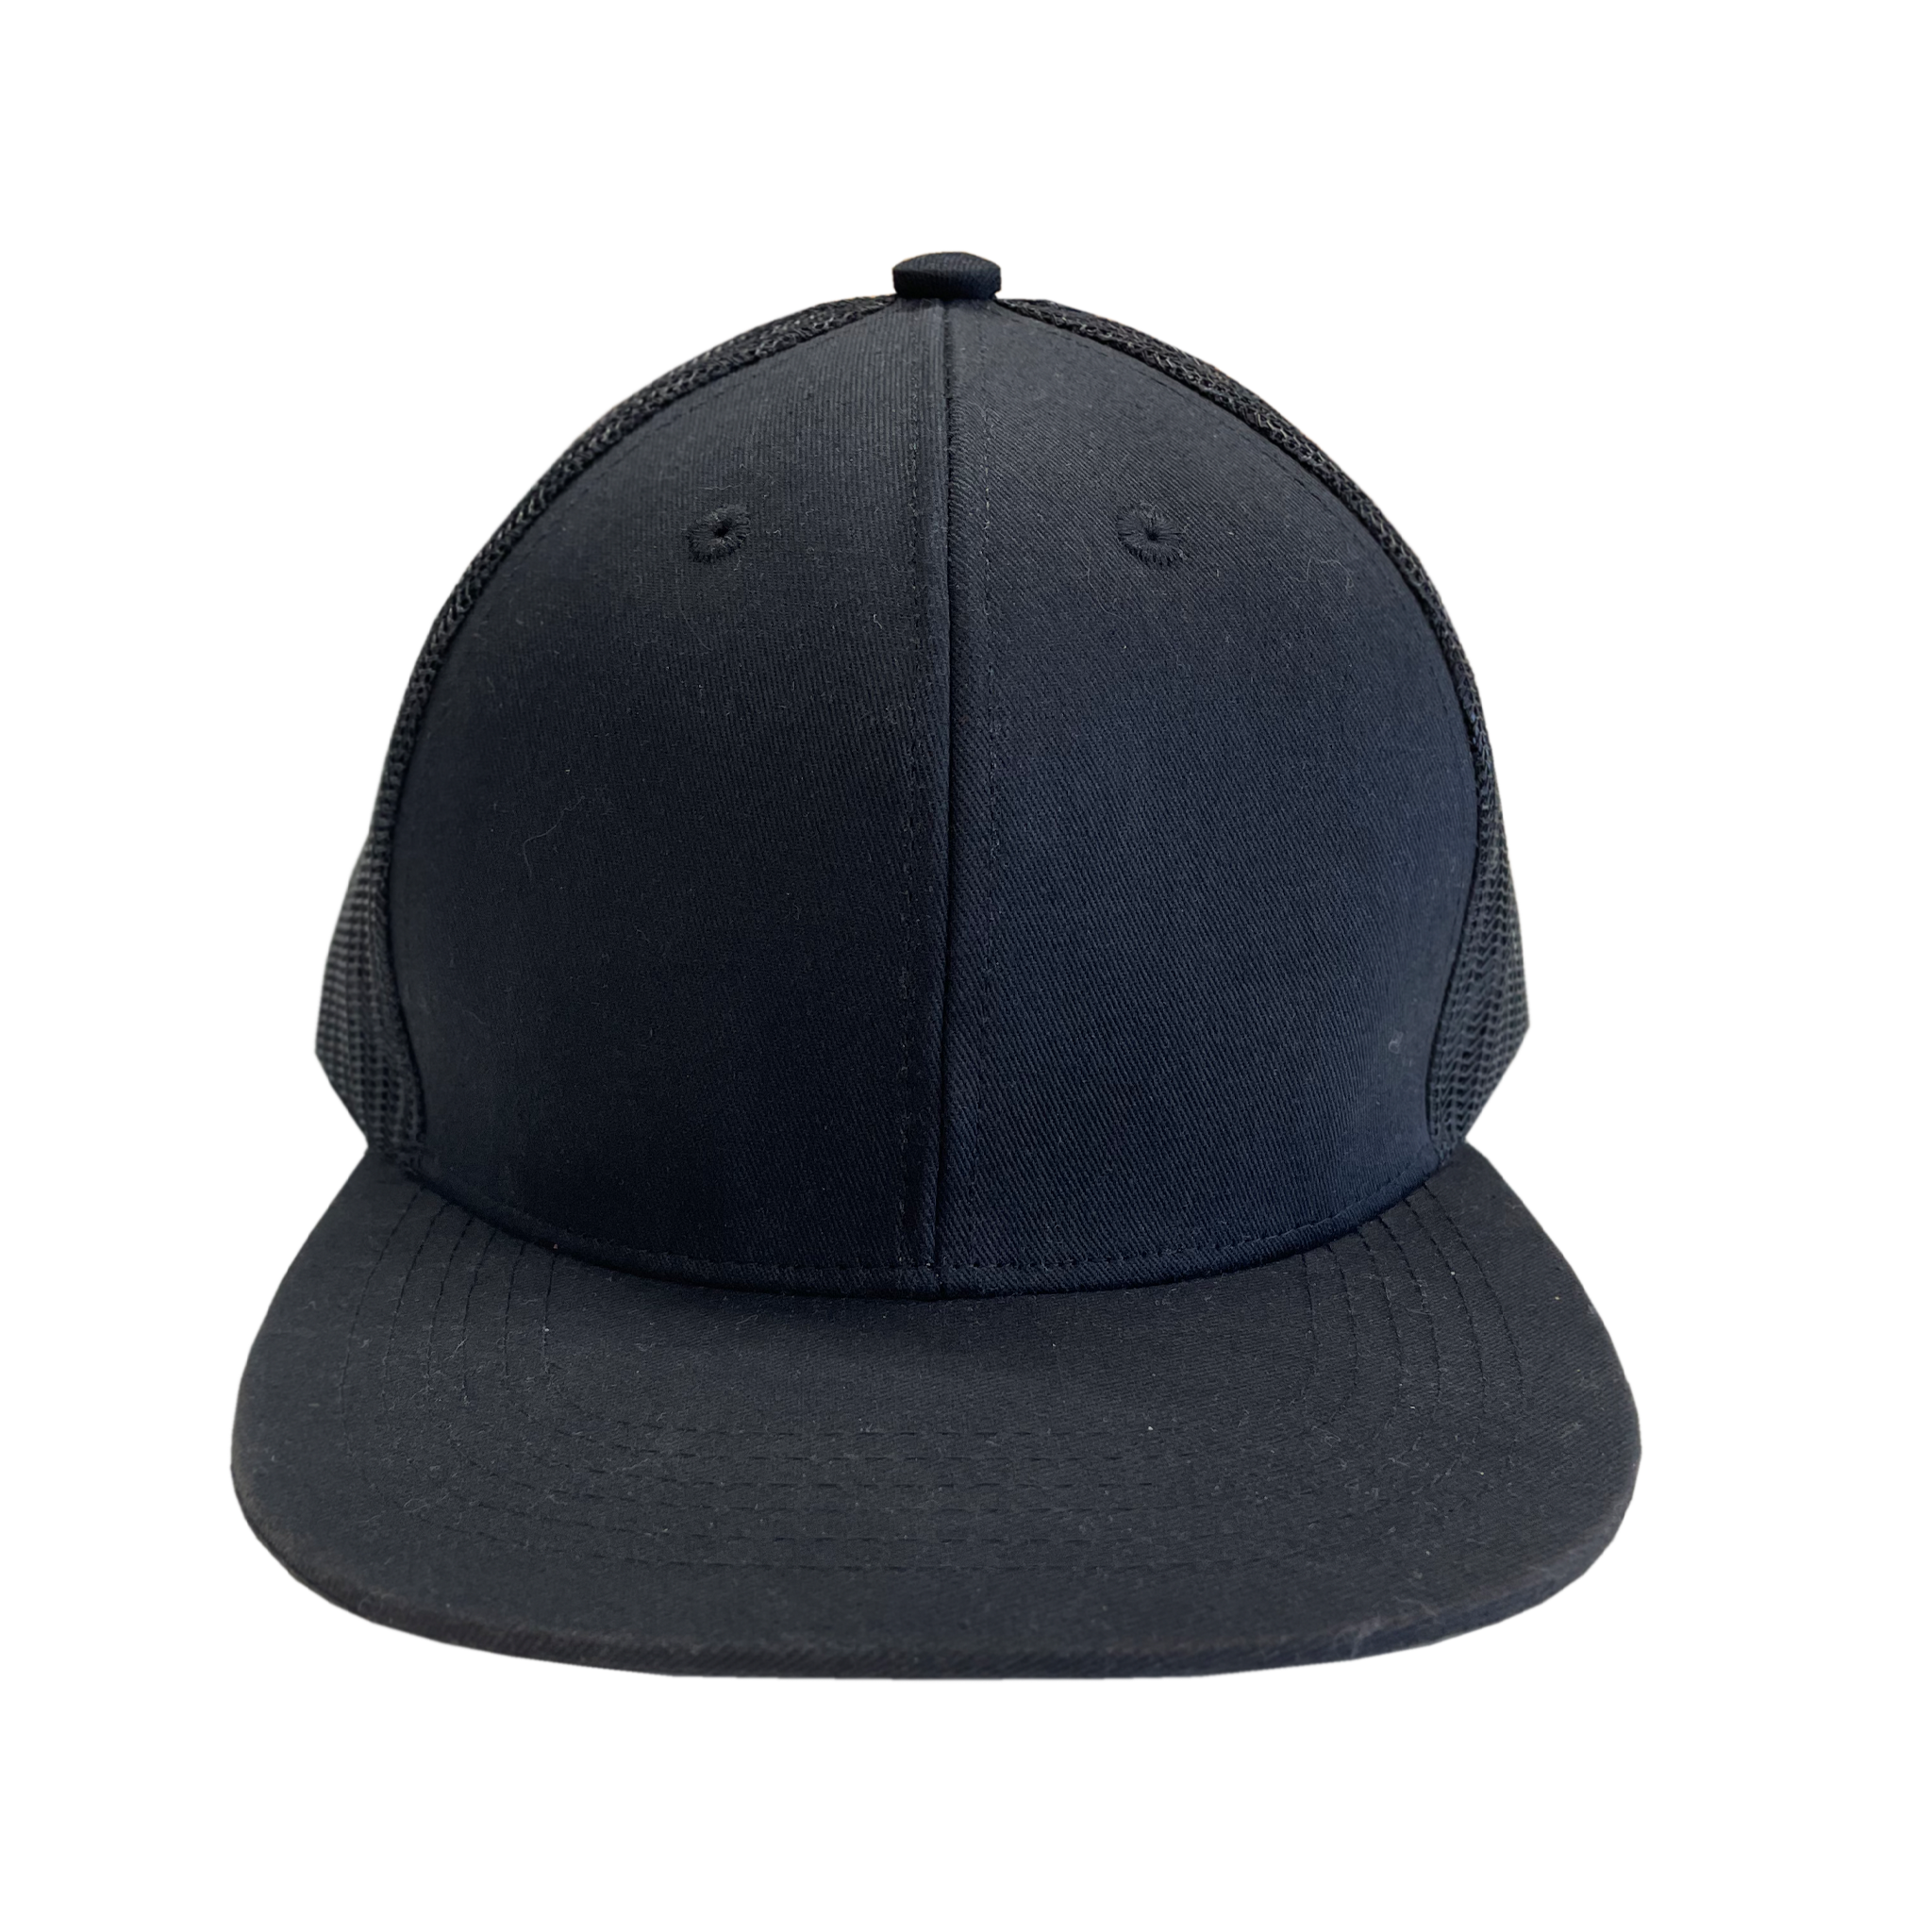 Front View of GOEX Black Trucker Hat